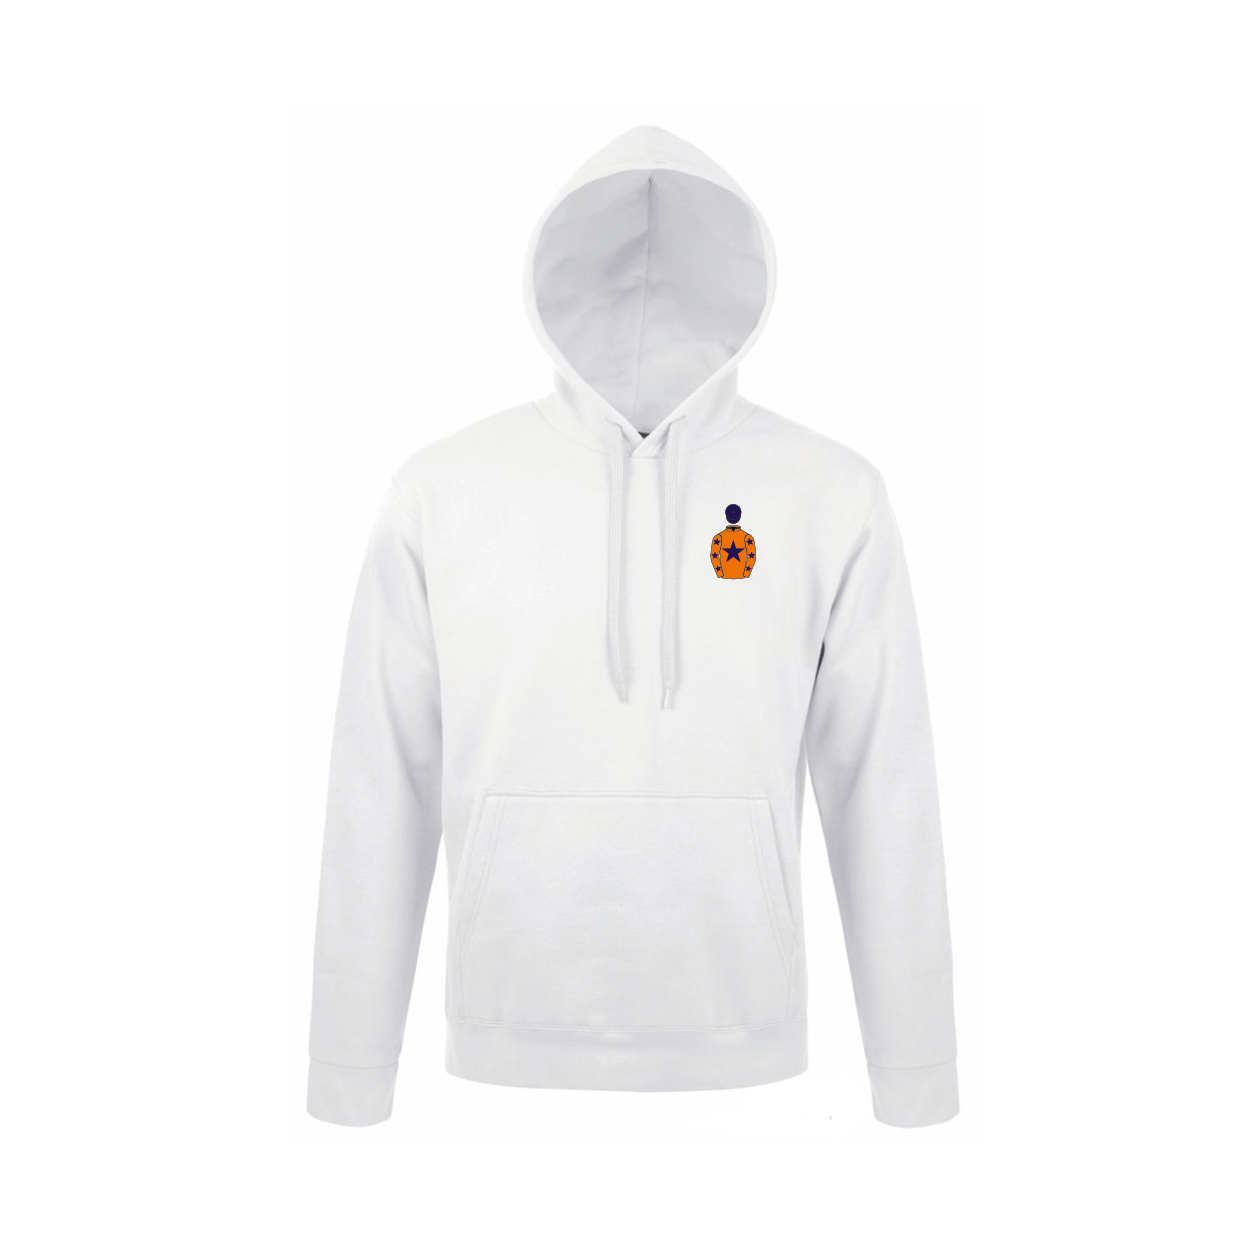 Unisex Bryan Drew Embroidered Hooded Sweatshirt - Clothing - Hacked Up